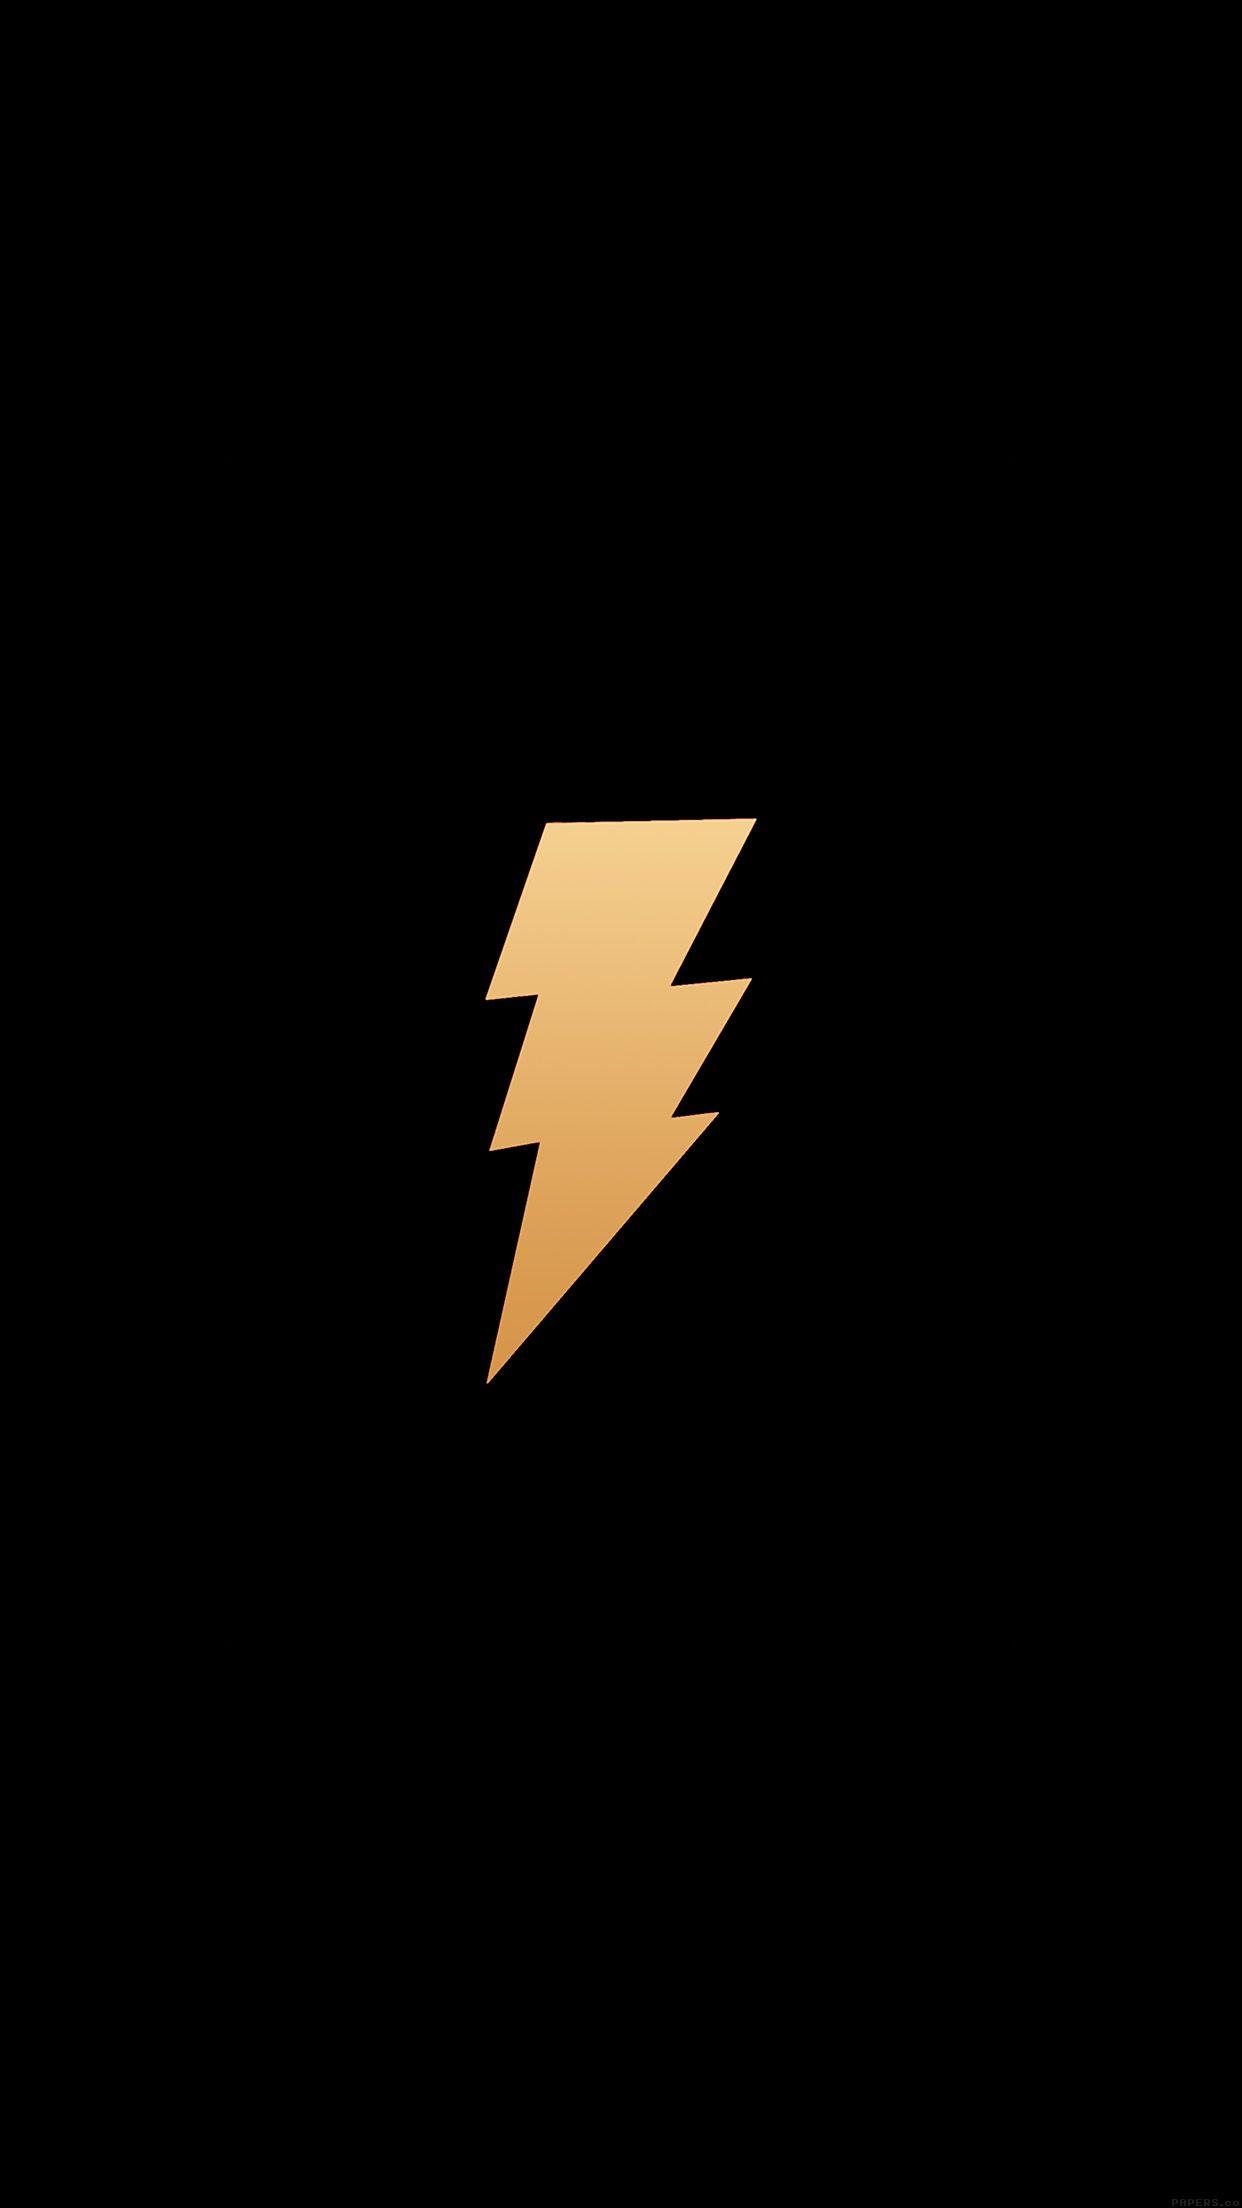 Dark Logo - Cool Thunder Bolt Minimal Dark Logo Art Iphone6 Plus Wallpaper